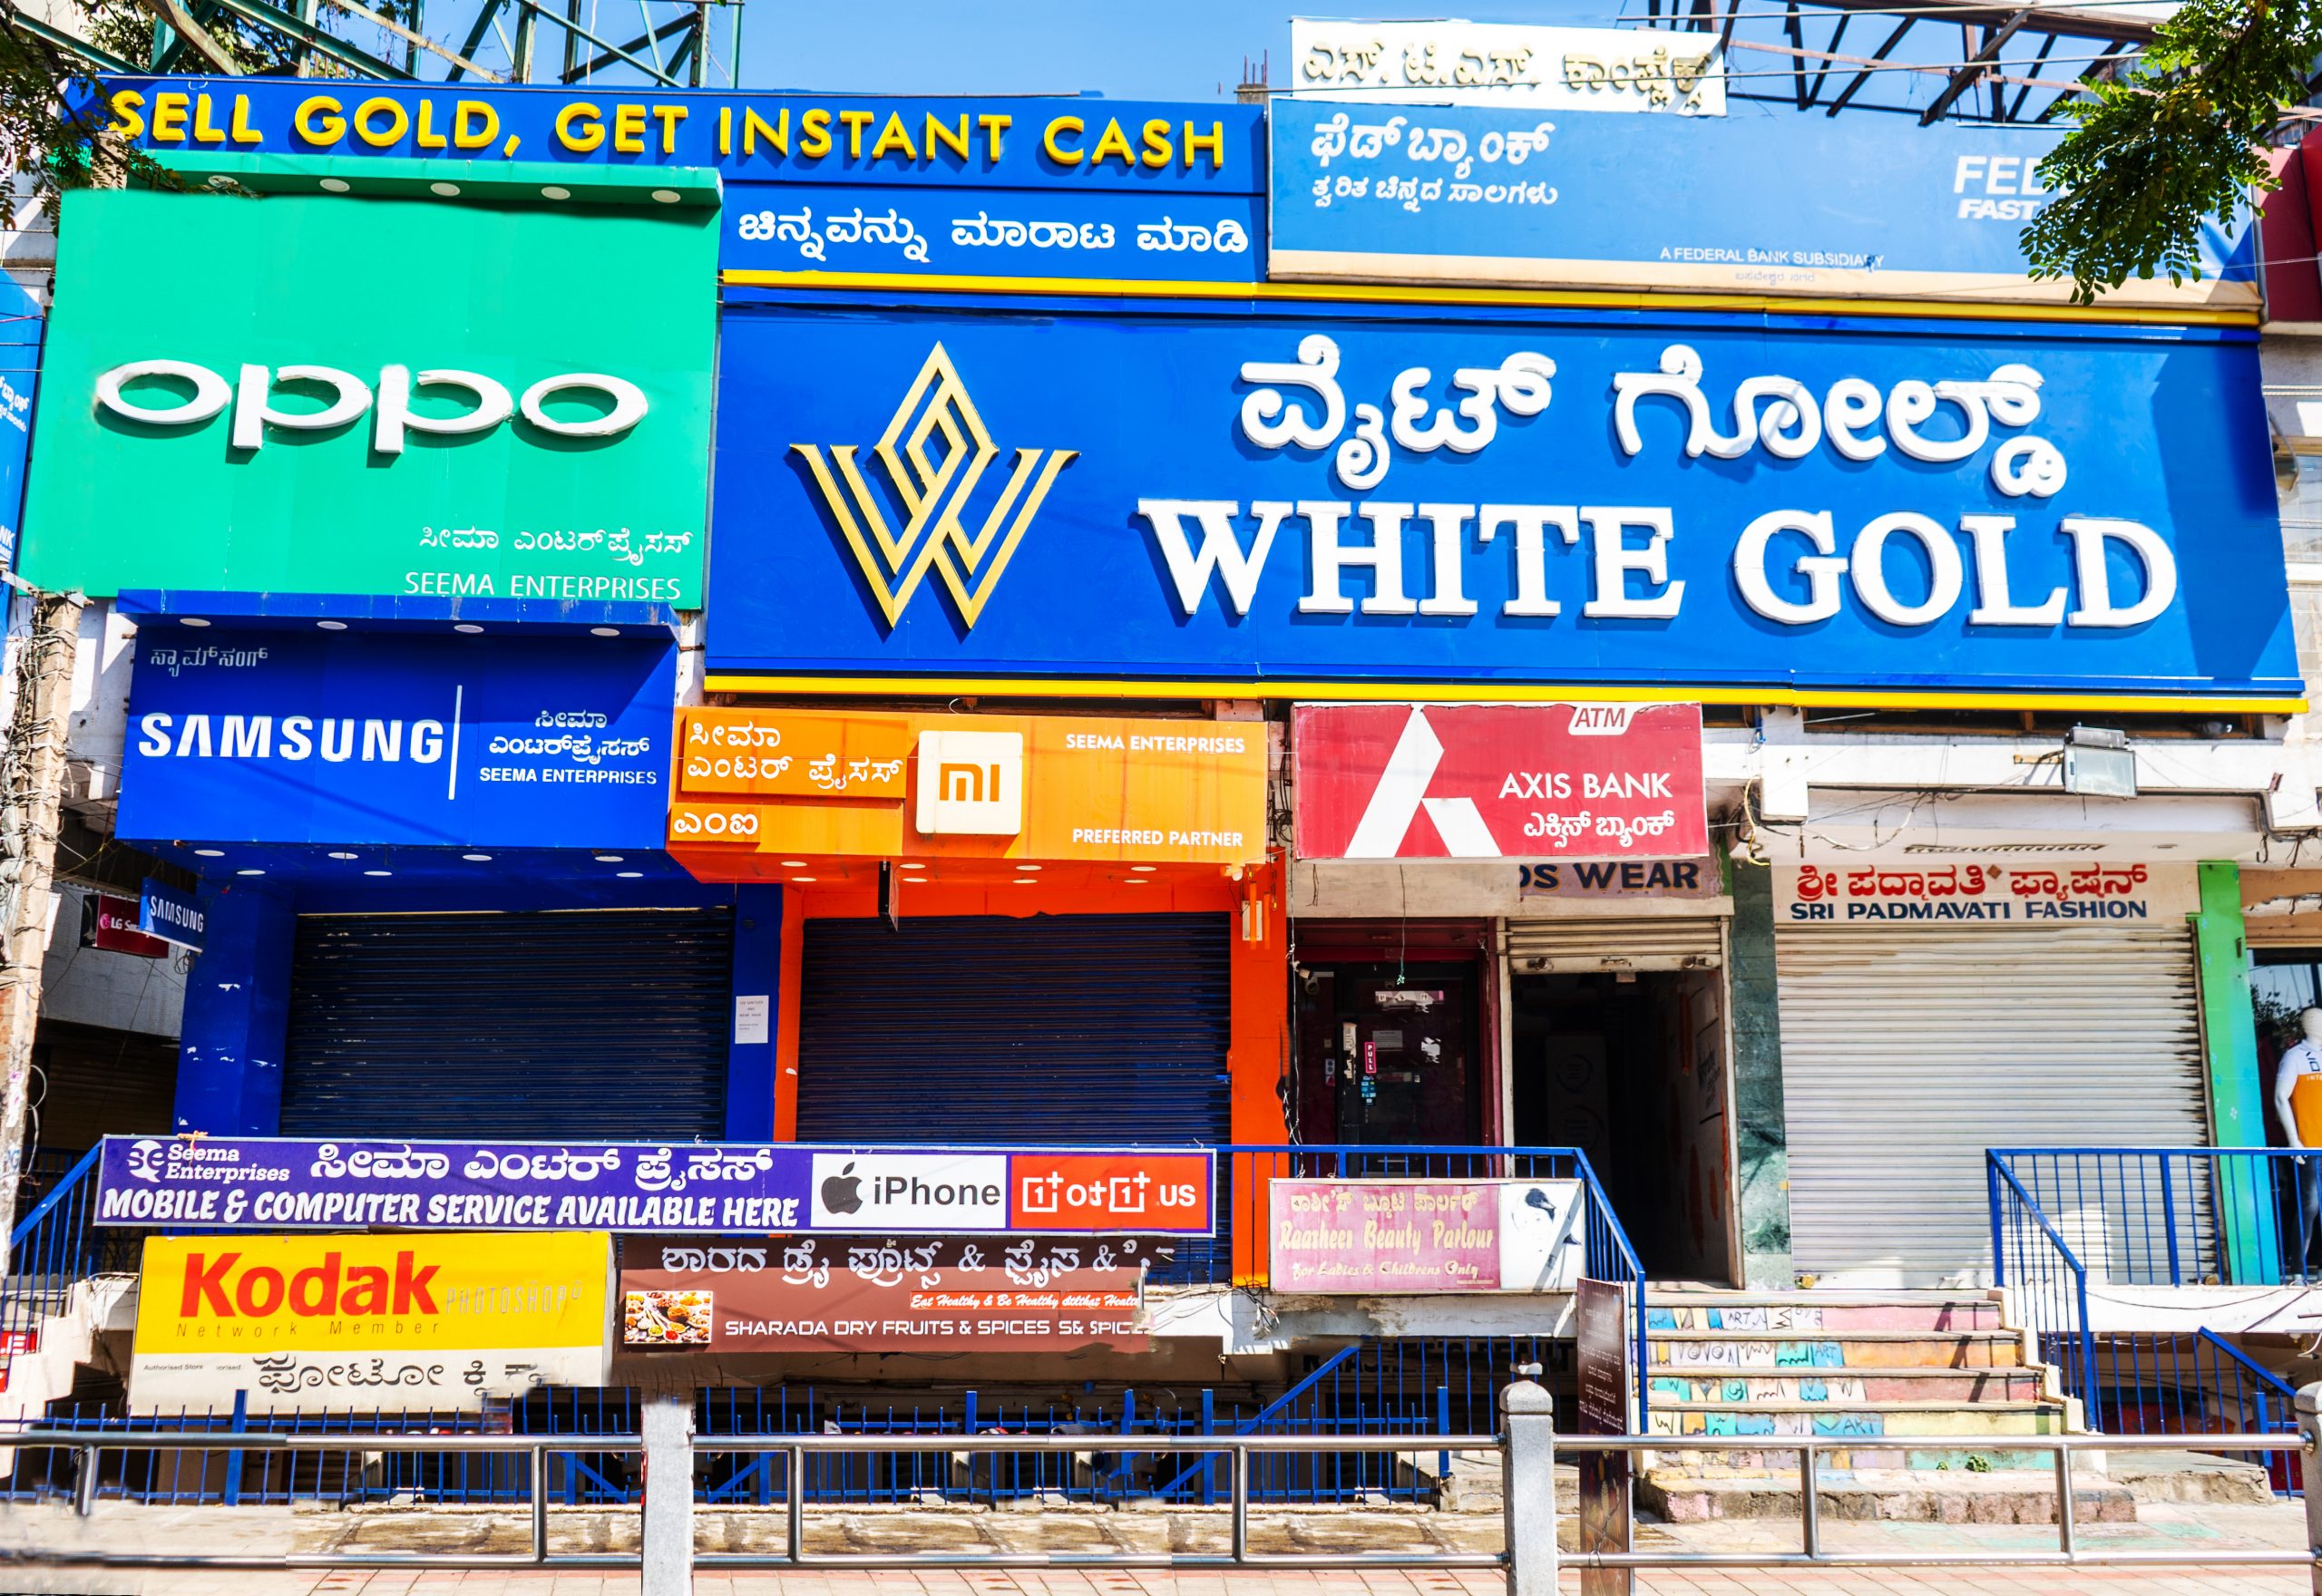 White Gold Basaveshwaranagar - Turn Your Gold Into Money